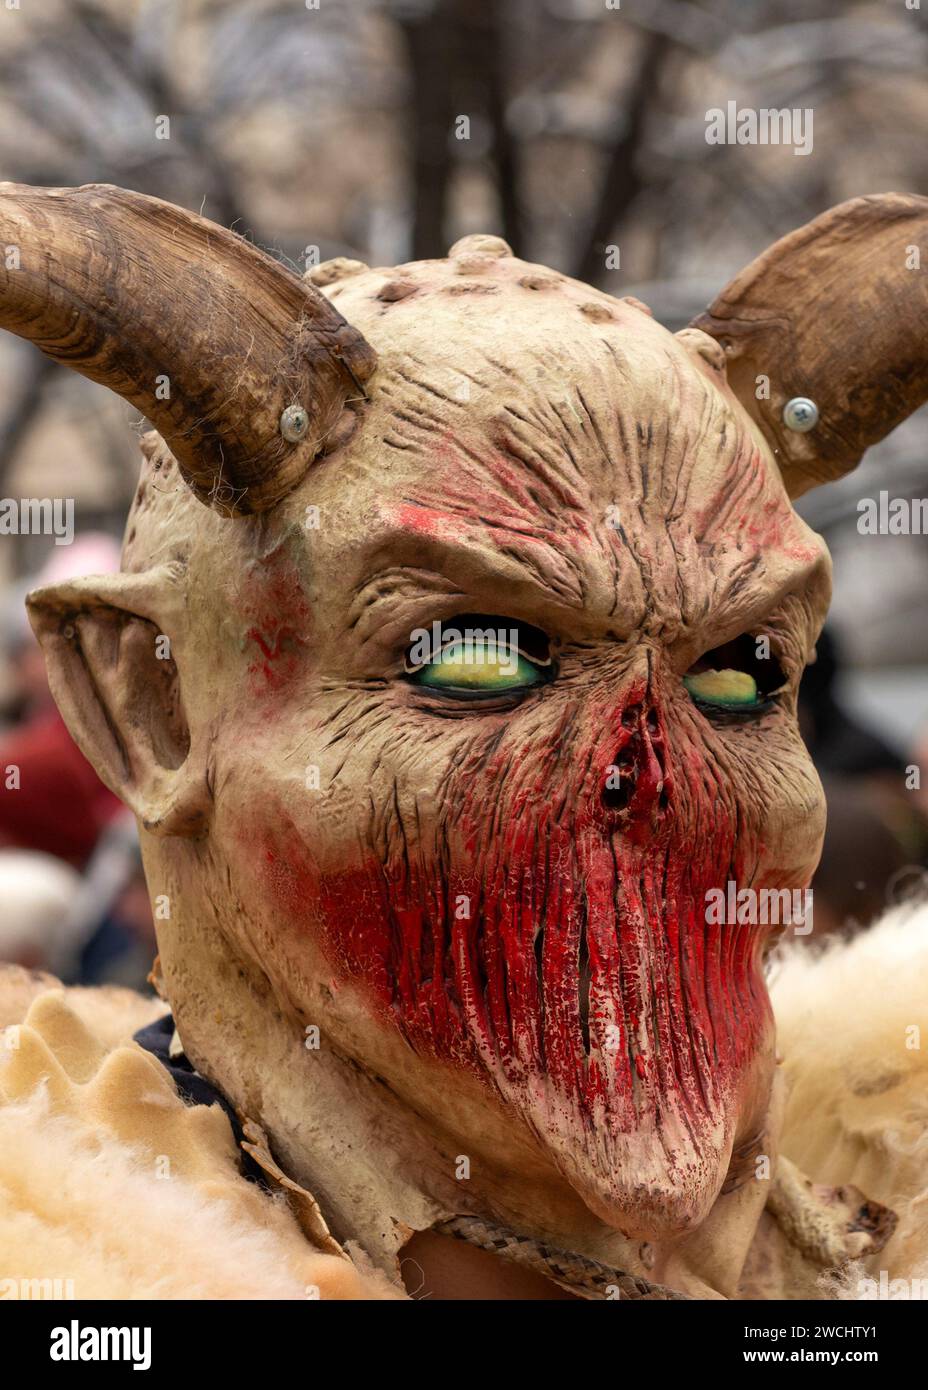 Horrormasken-Porträt beim Surva International Masquerade and Mummers Festival in Pernik, Region Sofia, Bulgarien, Osteuropa, Balkan, EU Stockfoto